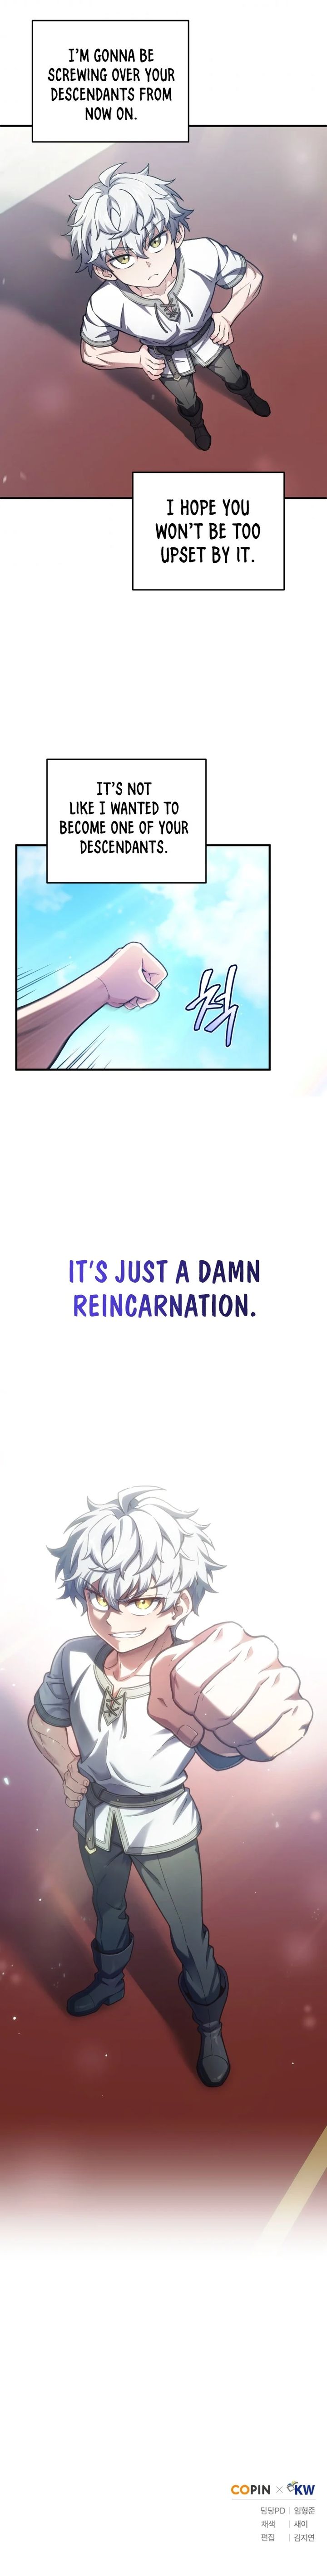 Damn Reincarnation 4 11